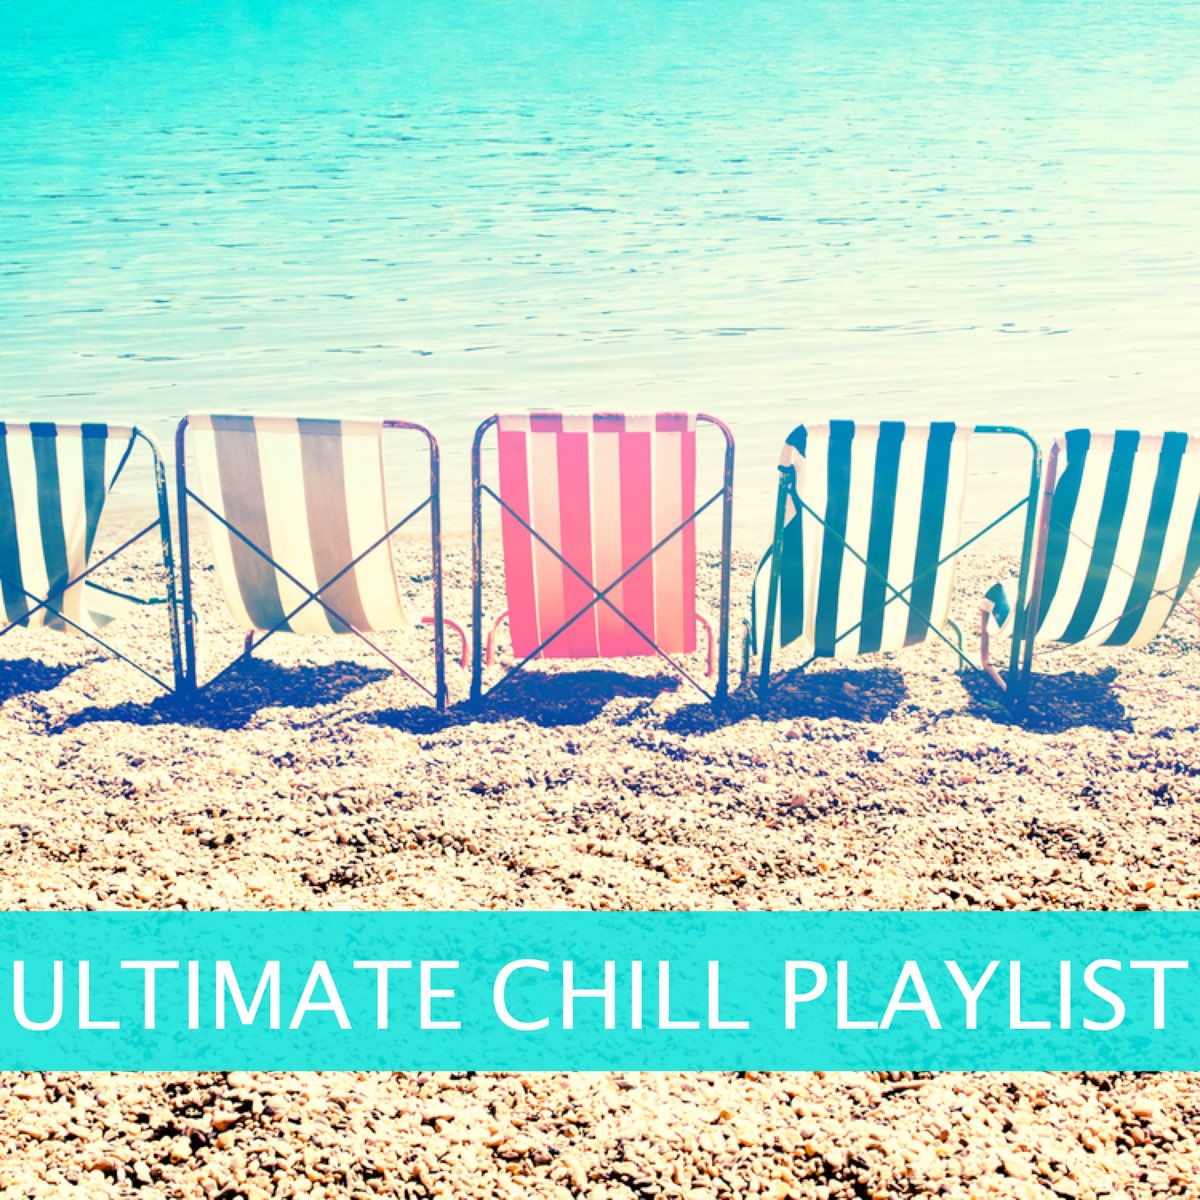 Chill playlist. A long Summer.